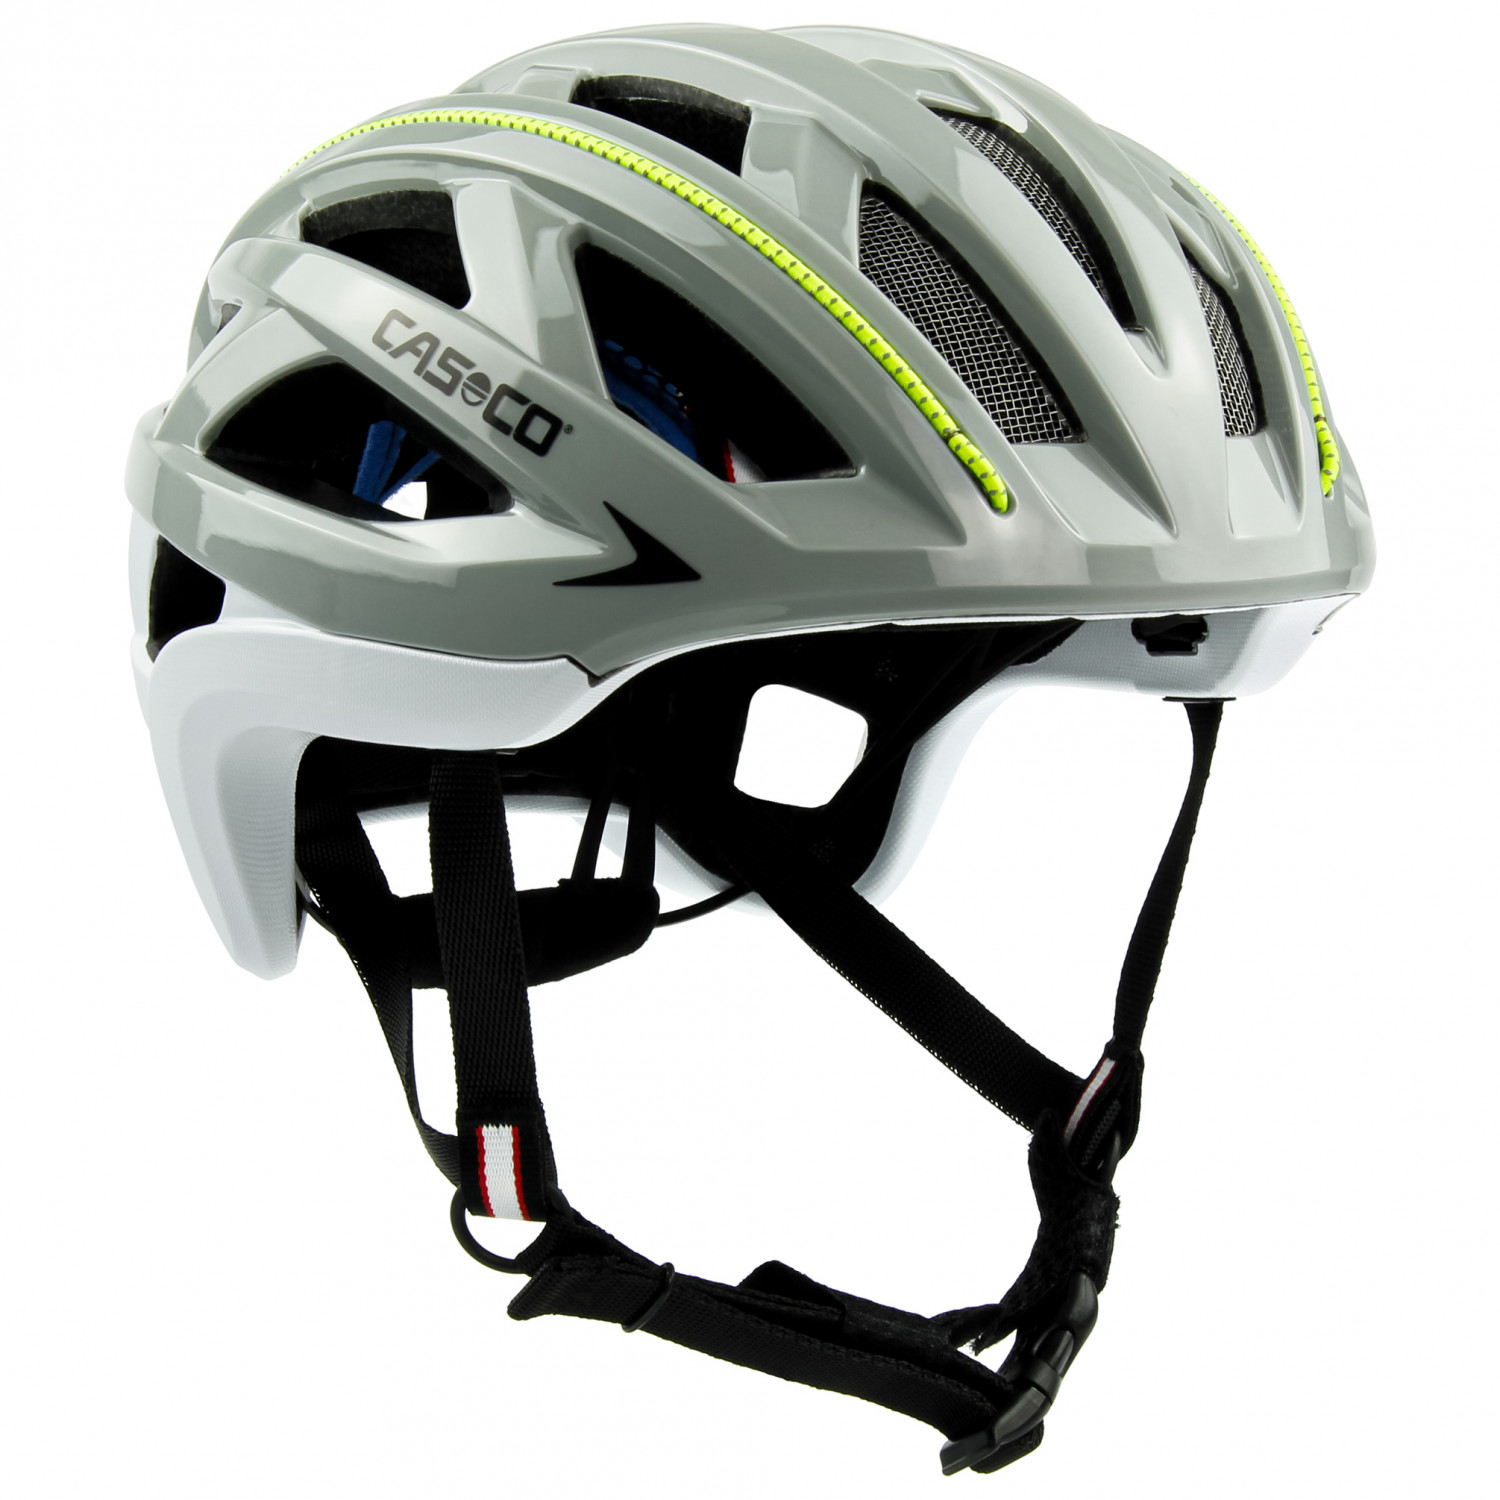 Велосипедный шлем Casco Cuda 2 Strada, цвет Grey/White/Neon шлем casco cuda 2